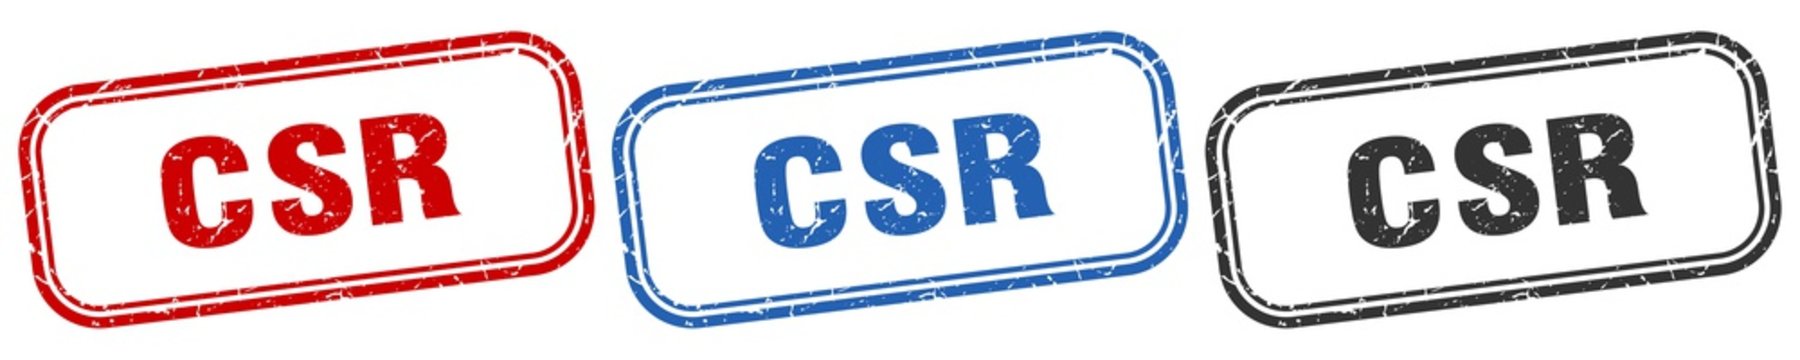 csr square isolated sign set. csr stamp